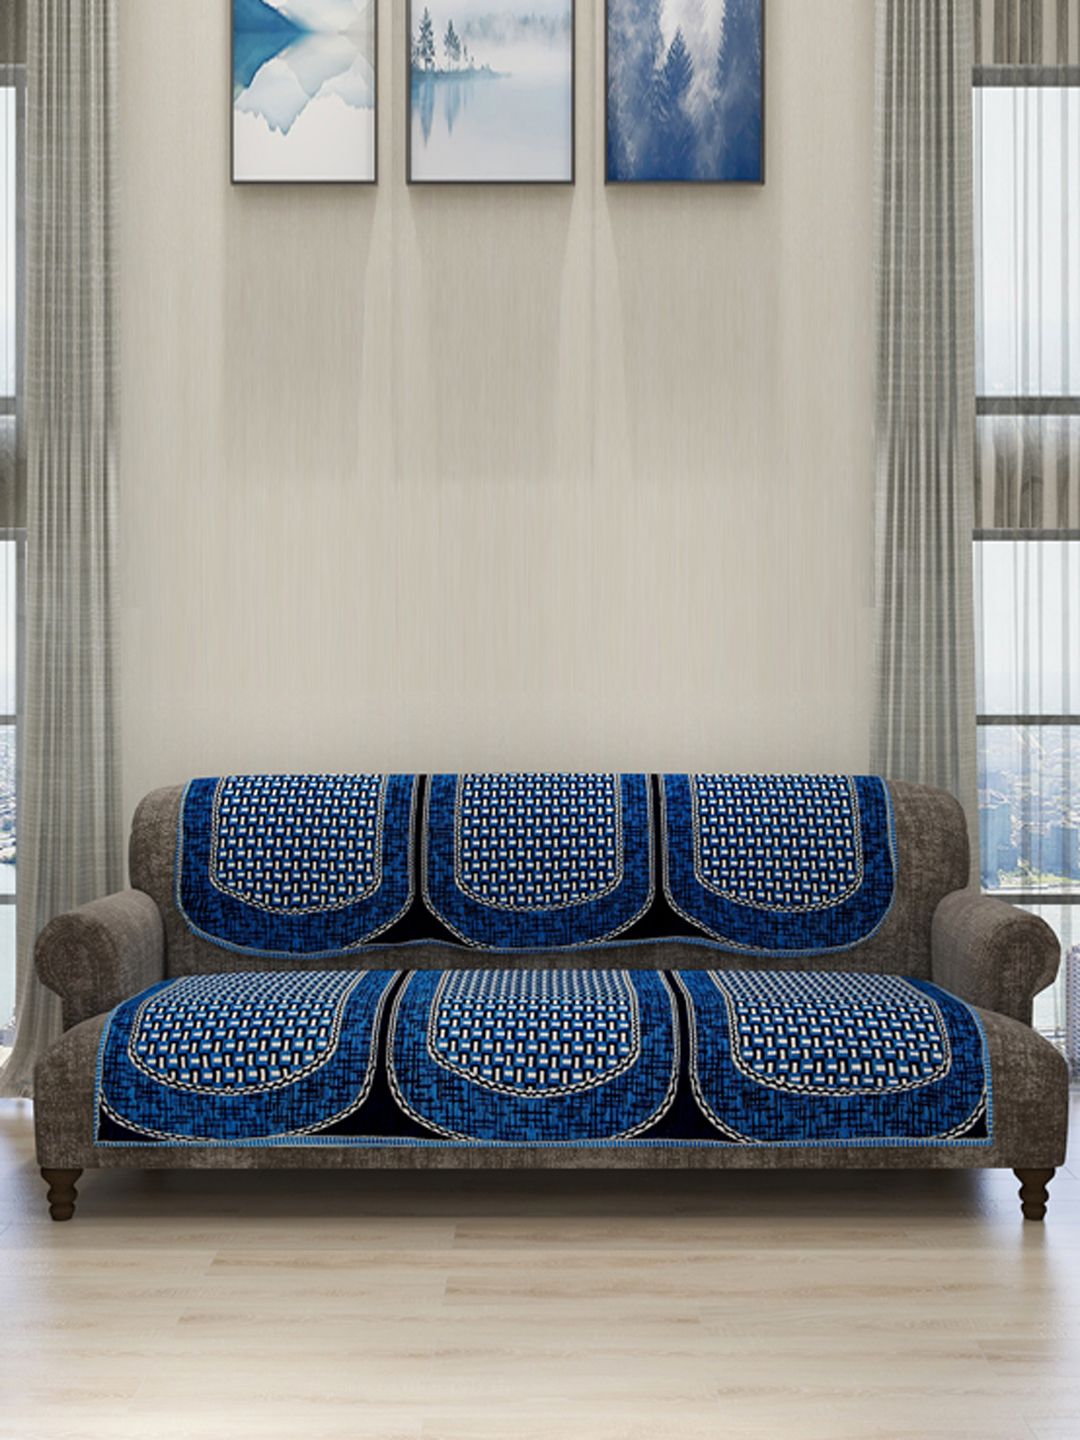 ROMEE 6-Piece Blue & Black Woven Design Chenille Sofa Set Covers Price in India